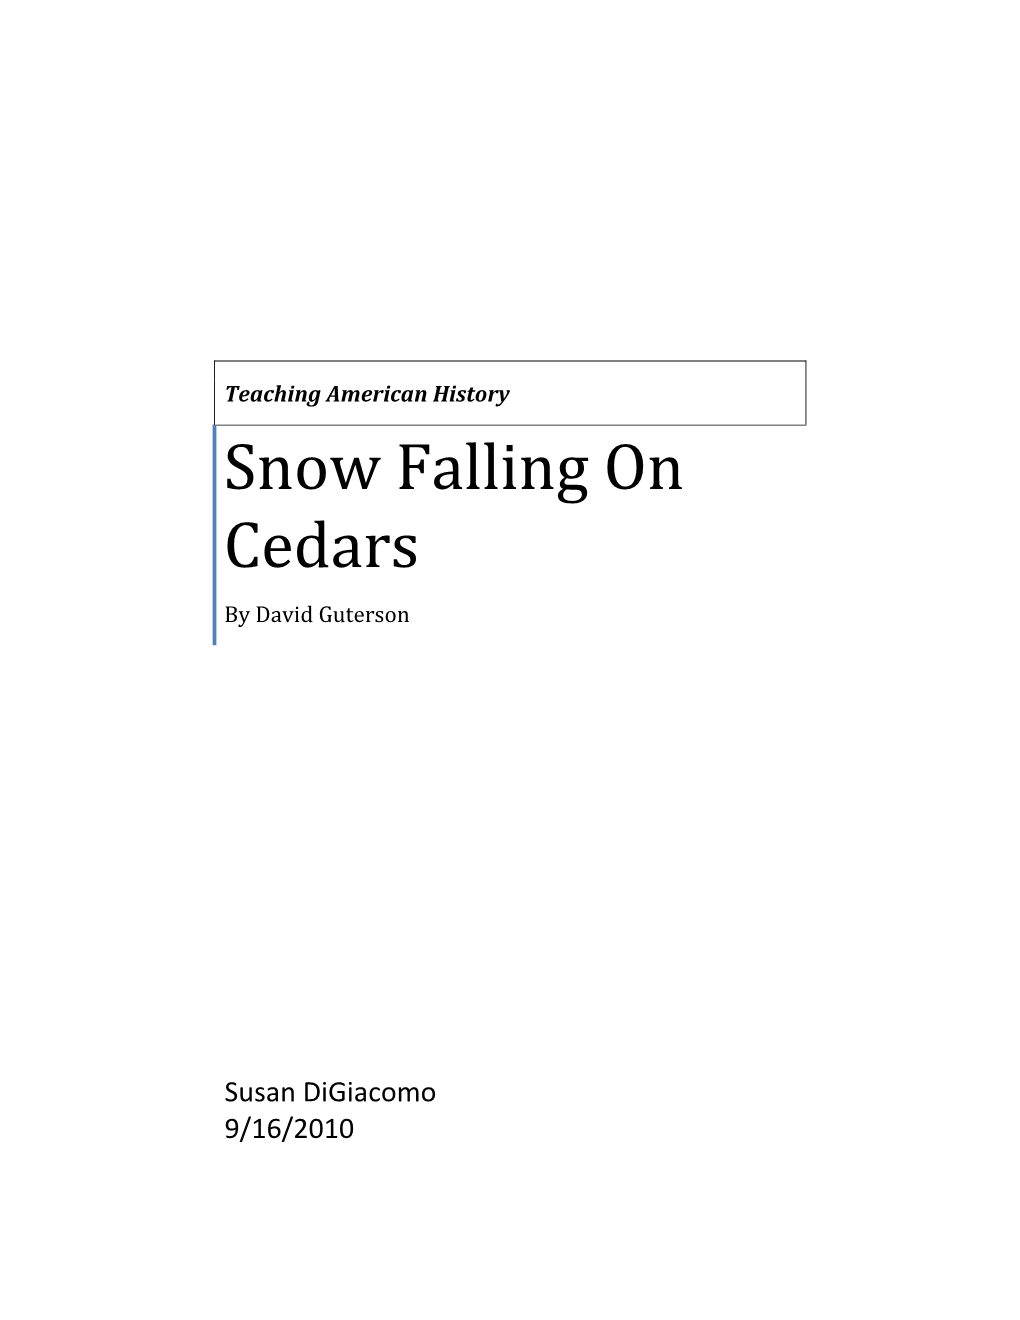 Snow Falling on Cedars by David Guterson